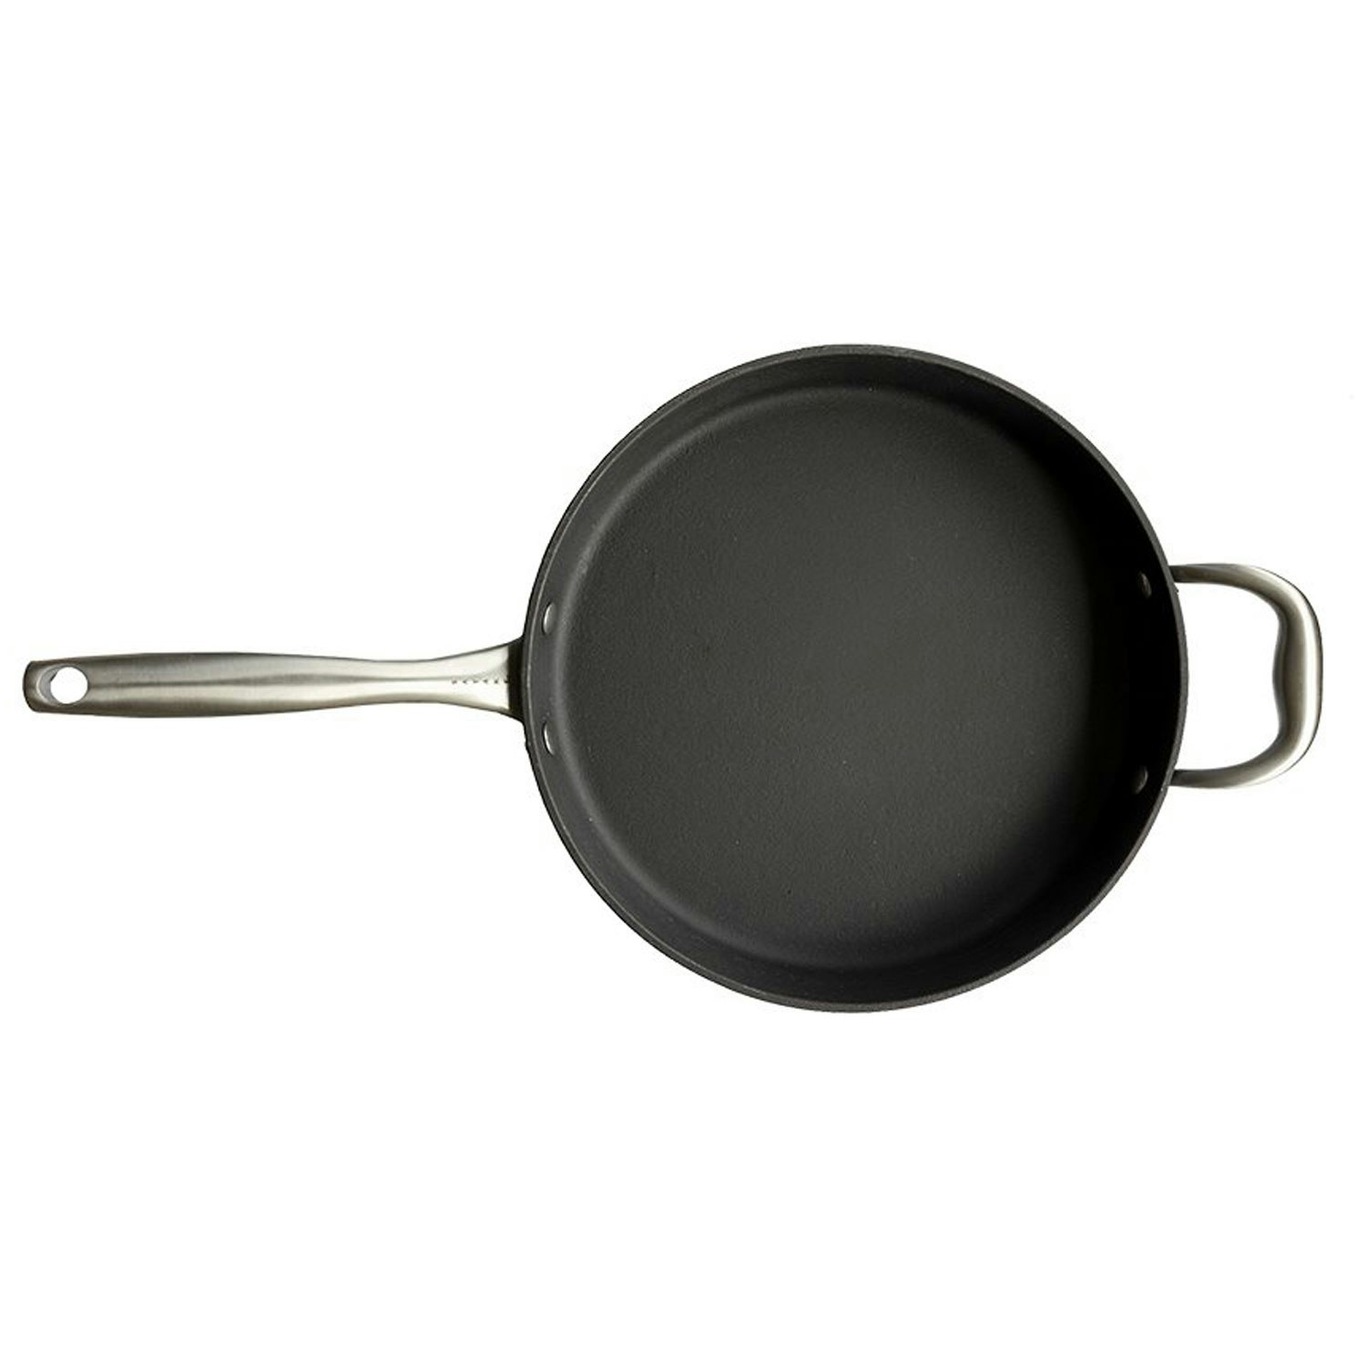 Renew ON Frying Pan, 24 cm